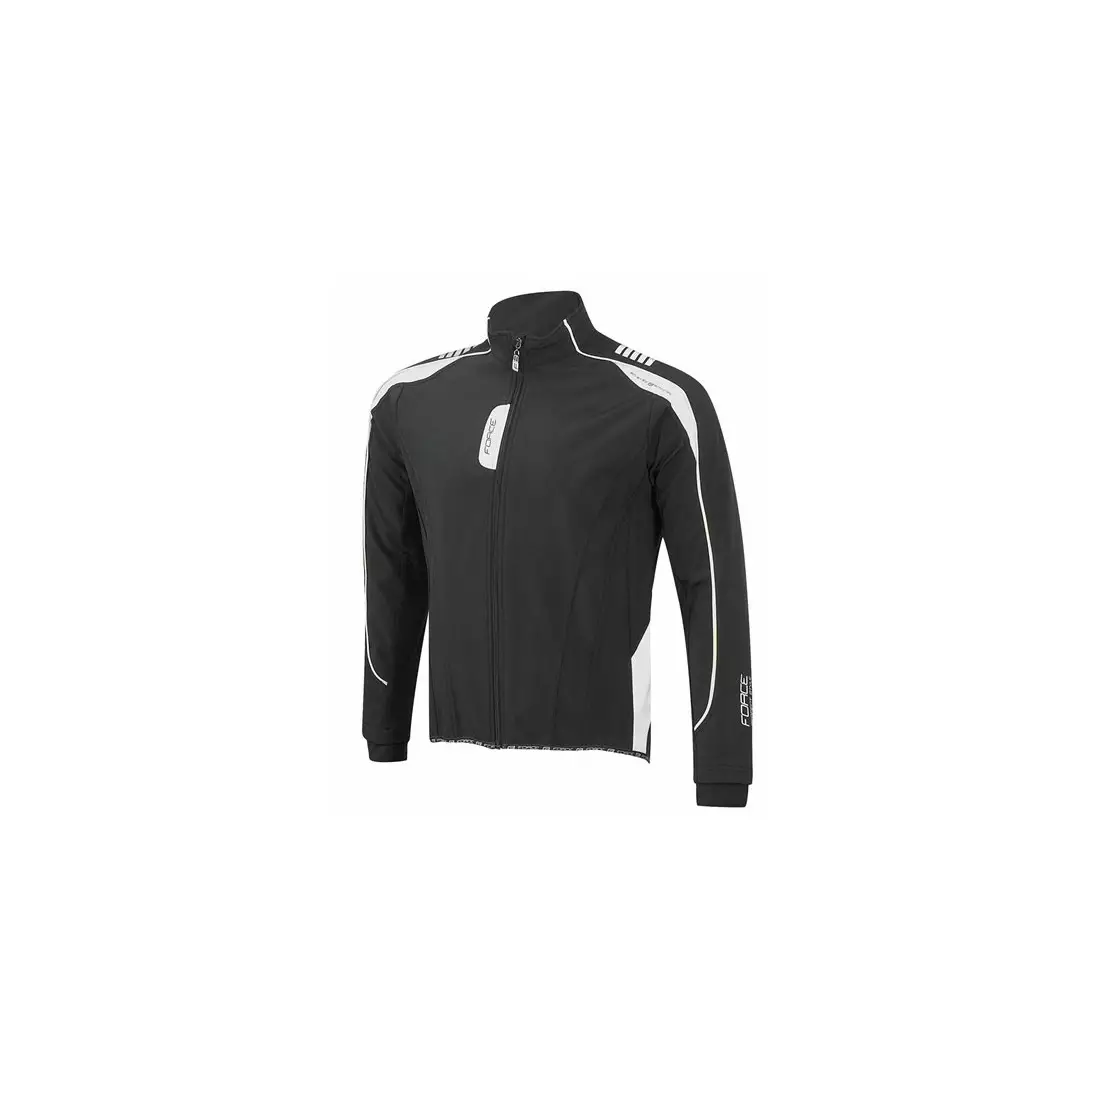 Jachetă de ciclism softshell FORCE X72 pentru bărbați, alb-negru 89992